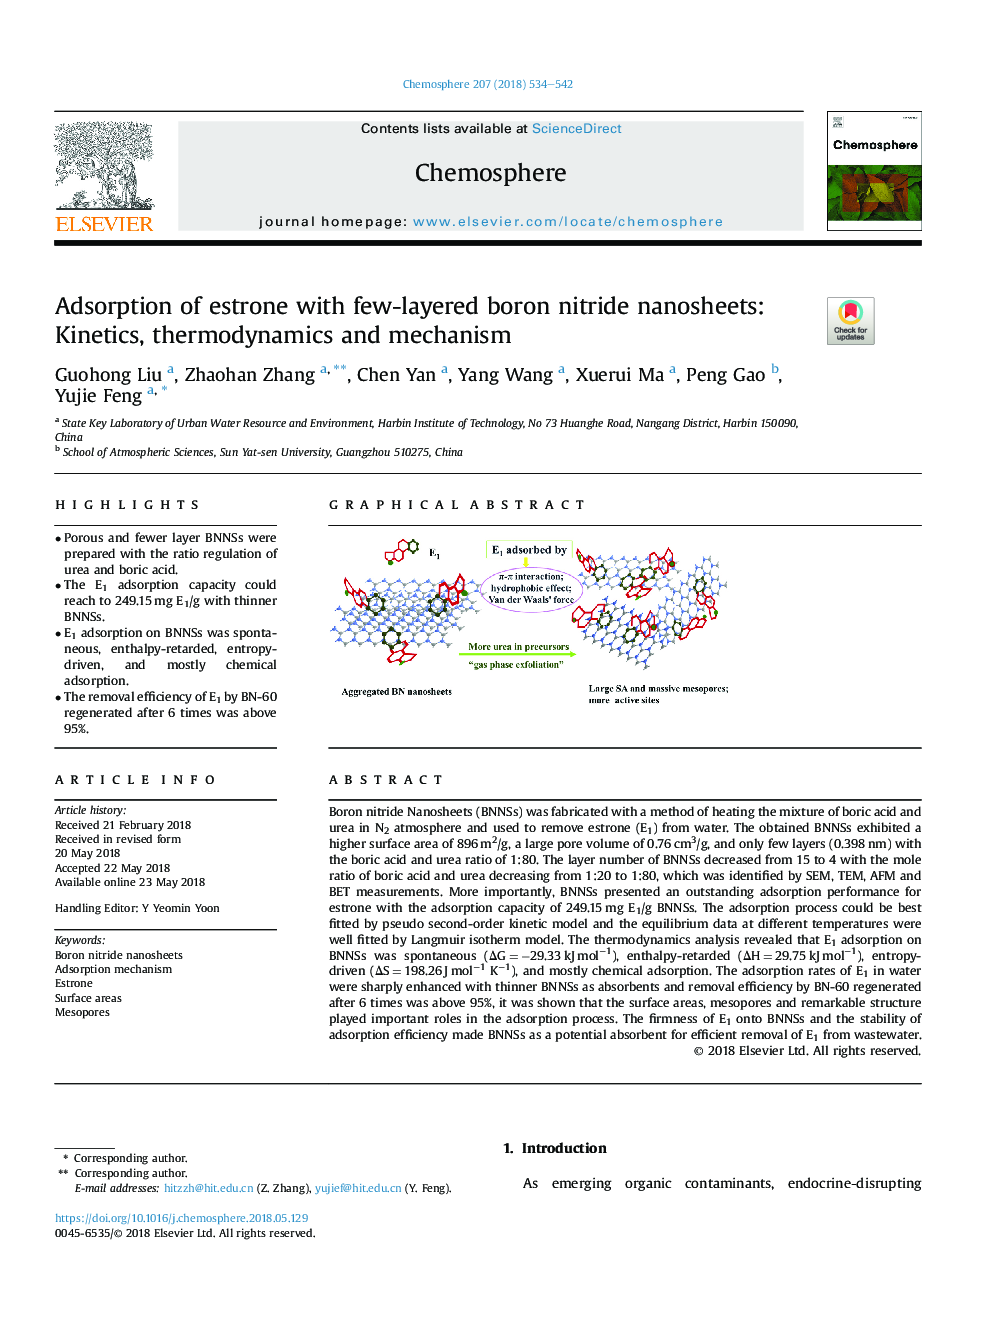 Adsorption of estrone with few-layered boron nitride nanosheets: Kinetics, thermodynamics and mechanism